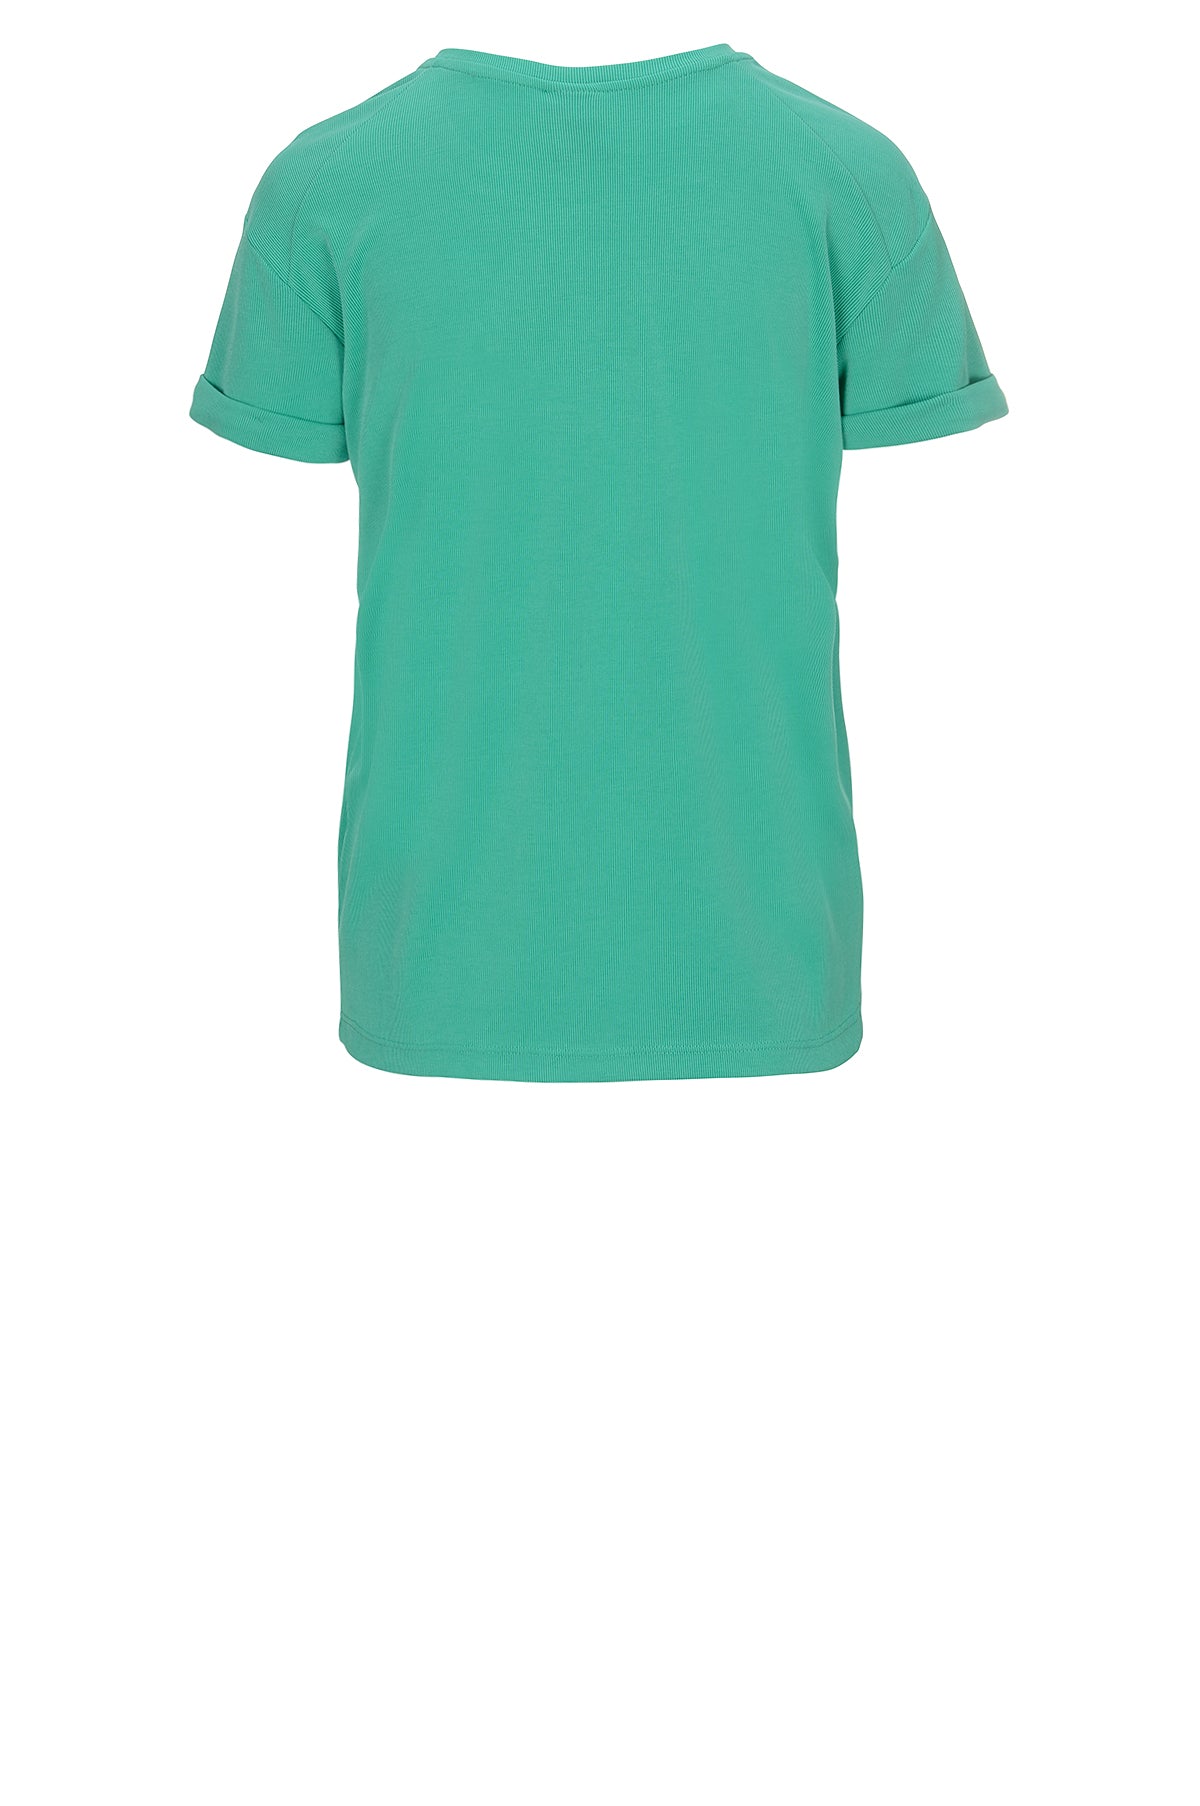 LUXZUZ // ONE TWO Karin T-Shirt 618 Emerald green